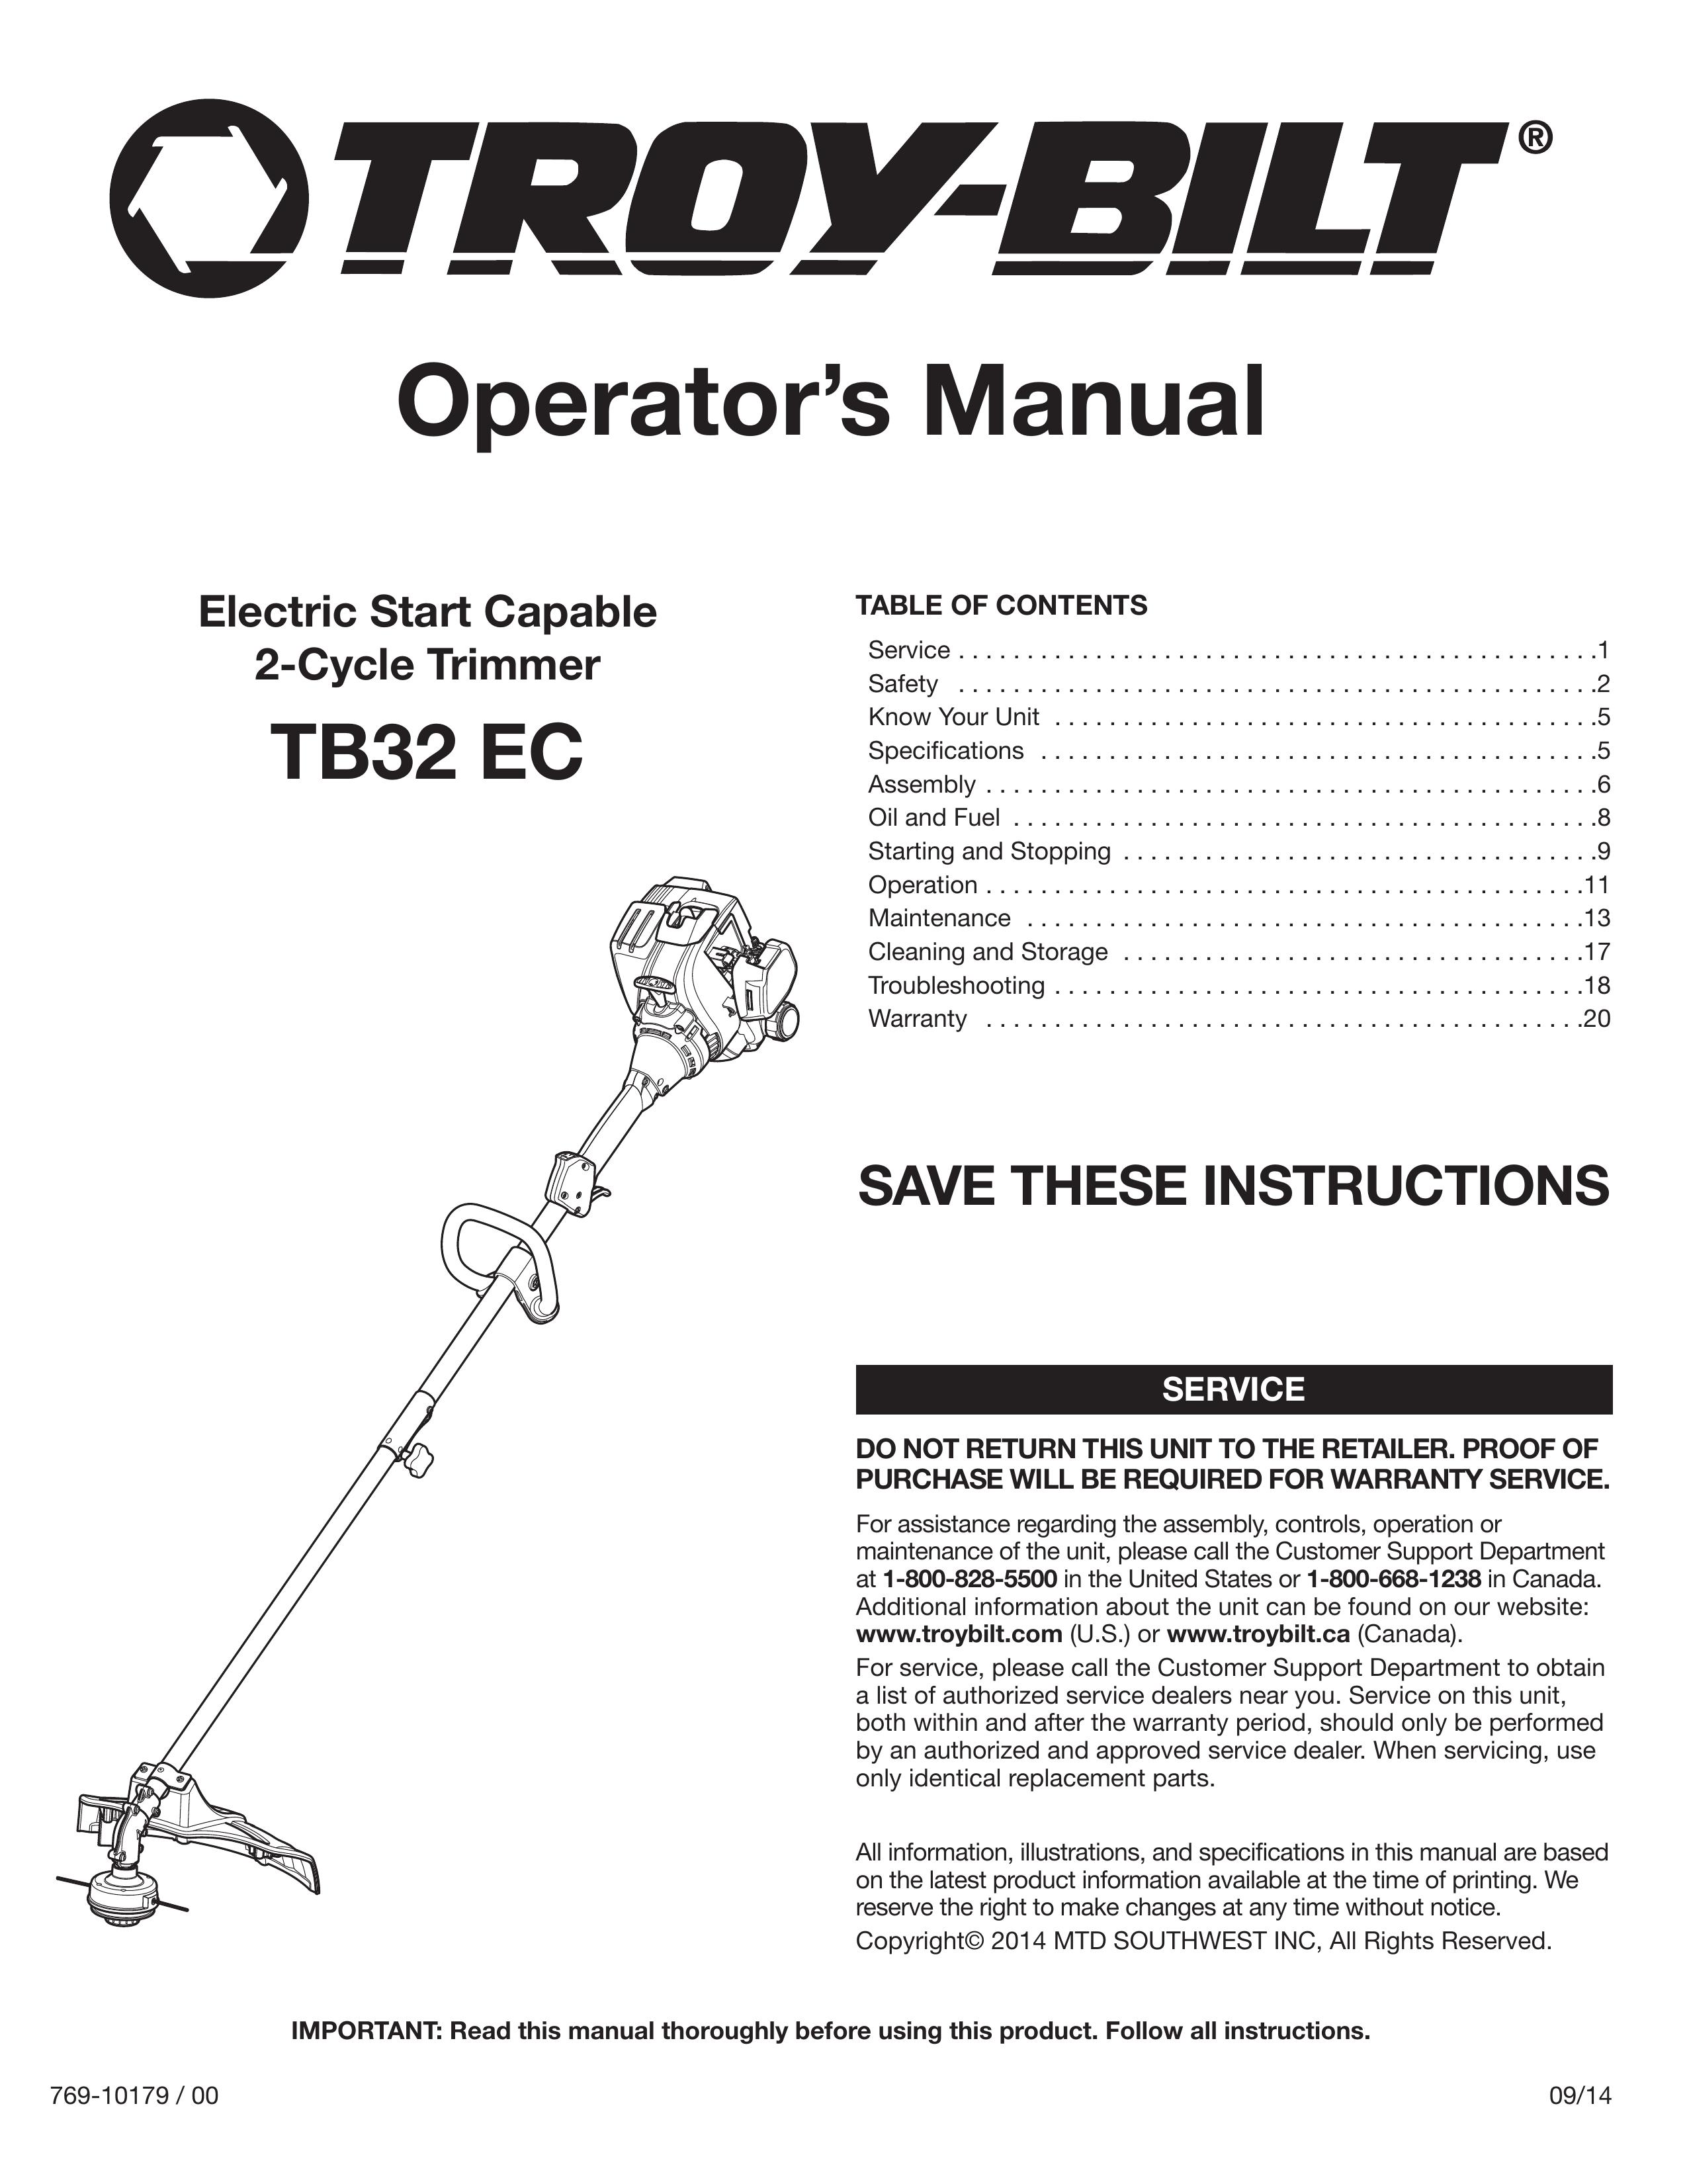 Troy-Bilt TB32 EC Trimmer User Manual